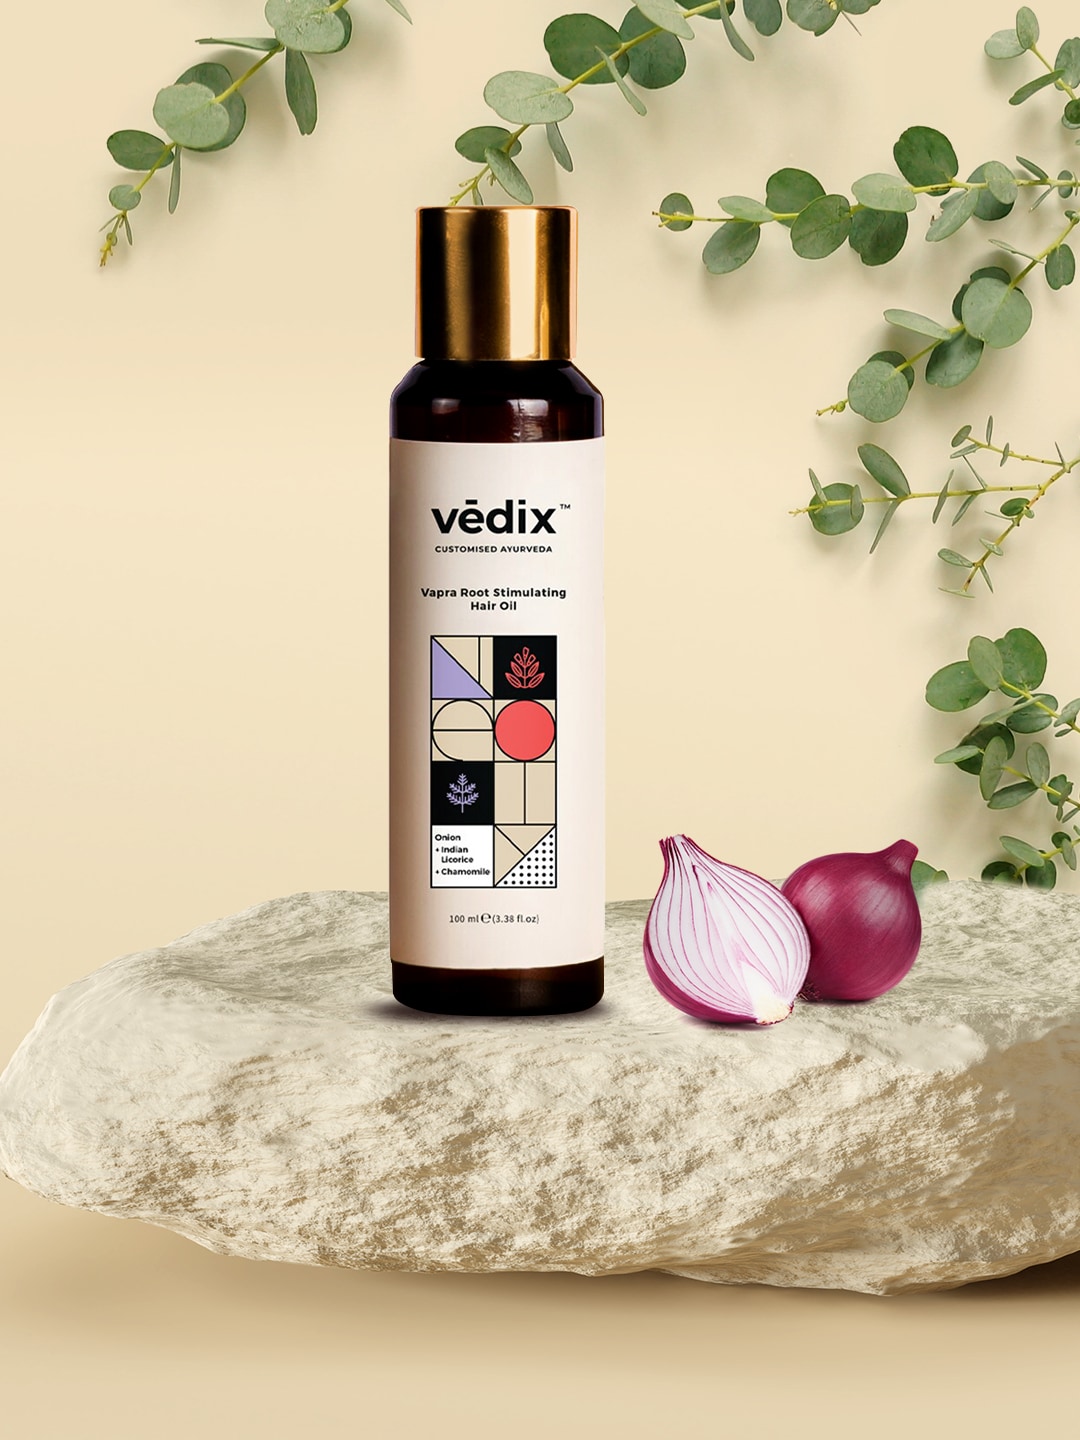 VEDIX Customized Ayurvedic Vapra Root Stimulating Hair Oil for Dry Scalp-Wavy Hair Price in India